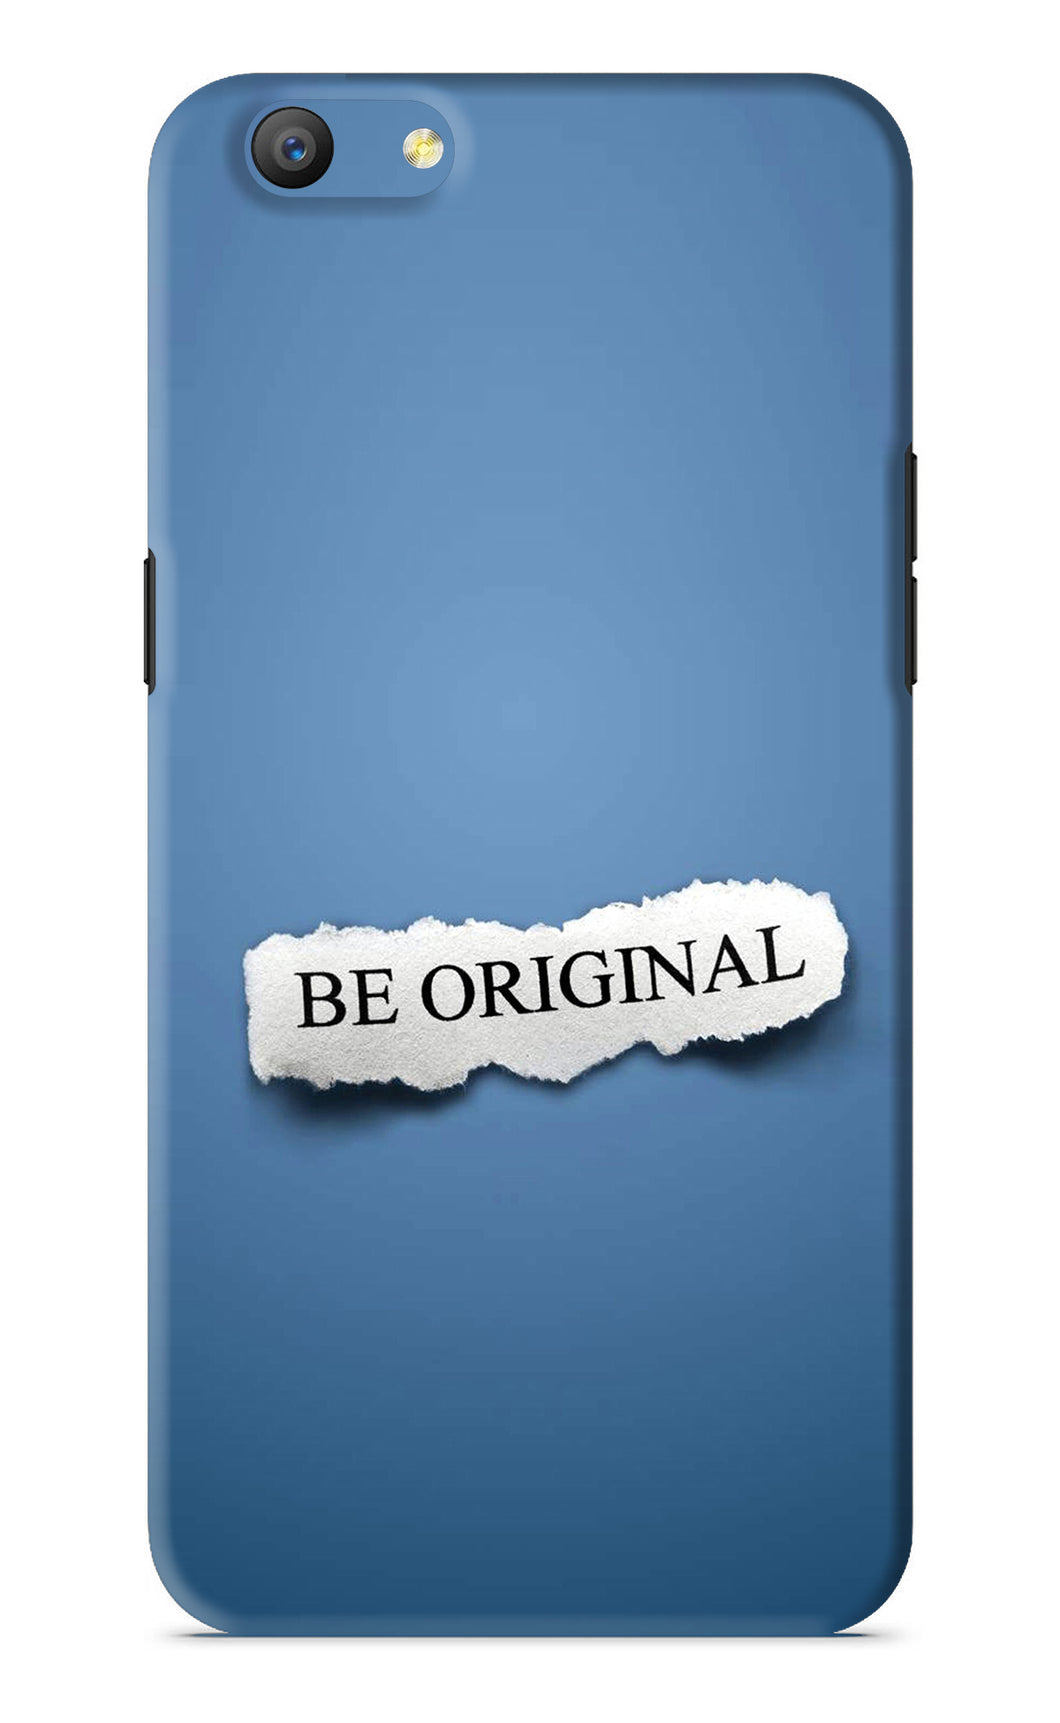 Be Original Oppo A57 Back Skin Wrap